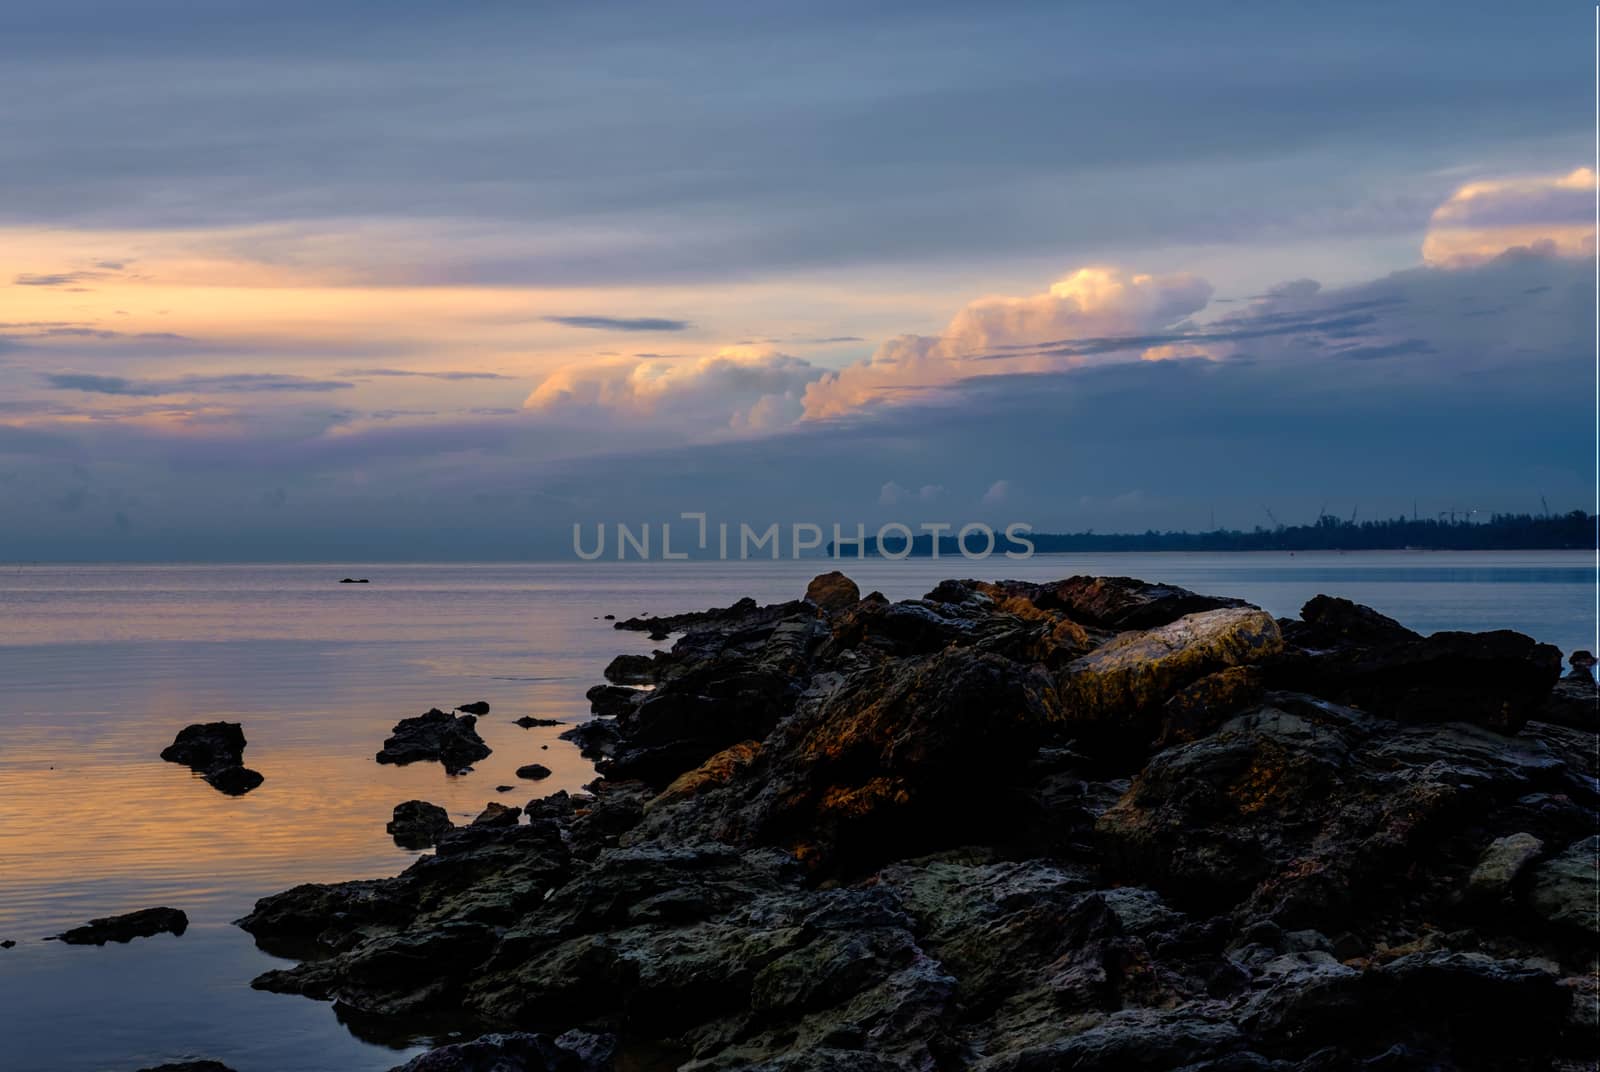 Stones in the sea at beautiful dusk sunrise by rainfallsup